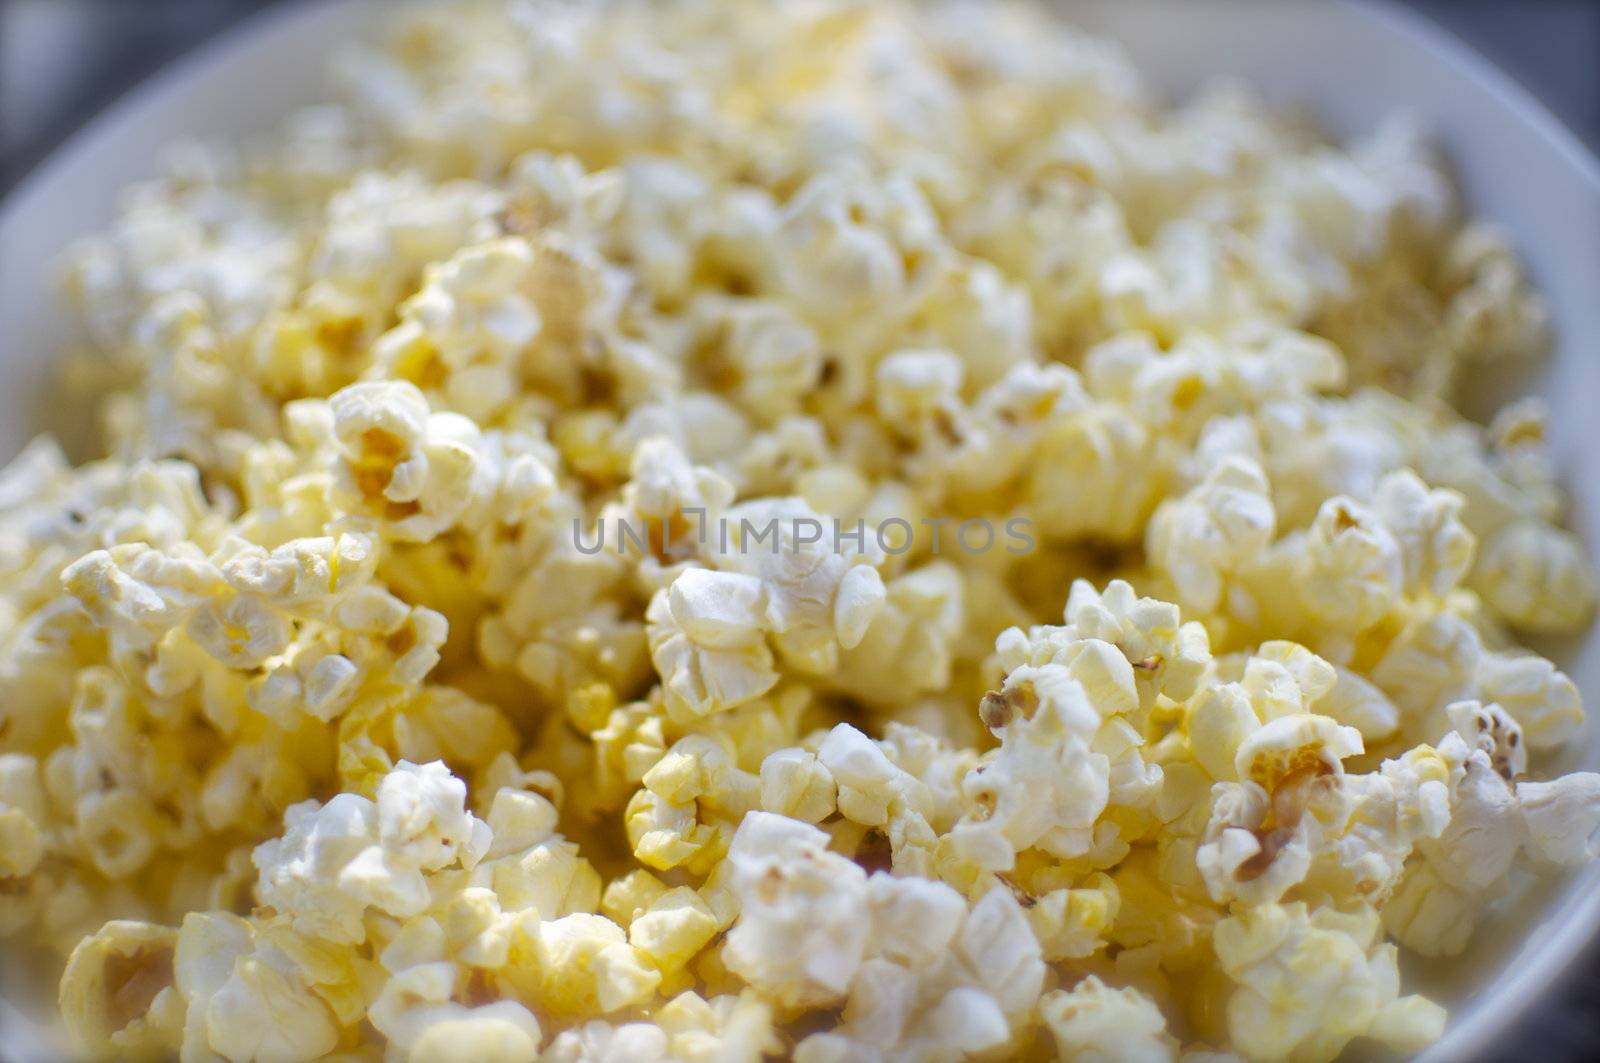 Bowl full of Popcorn by gilmourbto2001